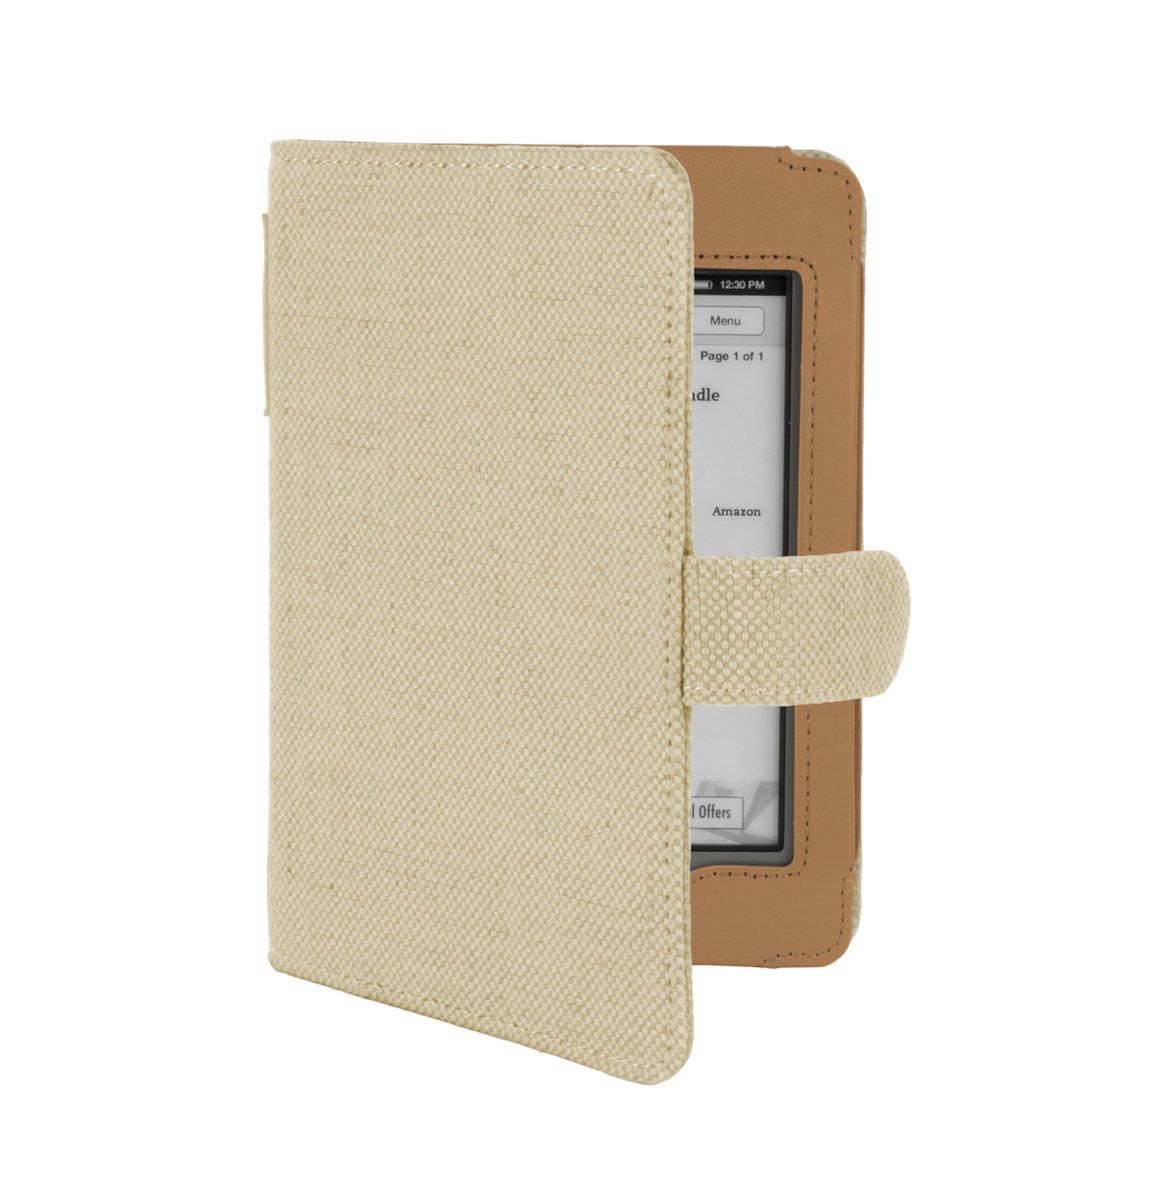  Kindle Touch Wi Fi 3G Sahara Brown Natural Hemp Book Style 